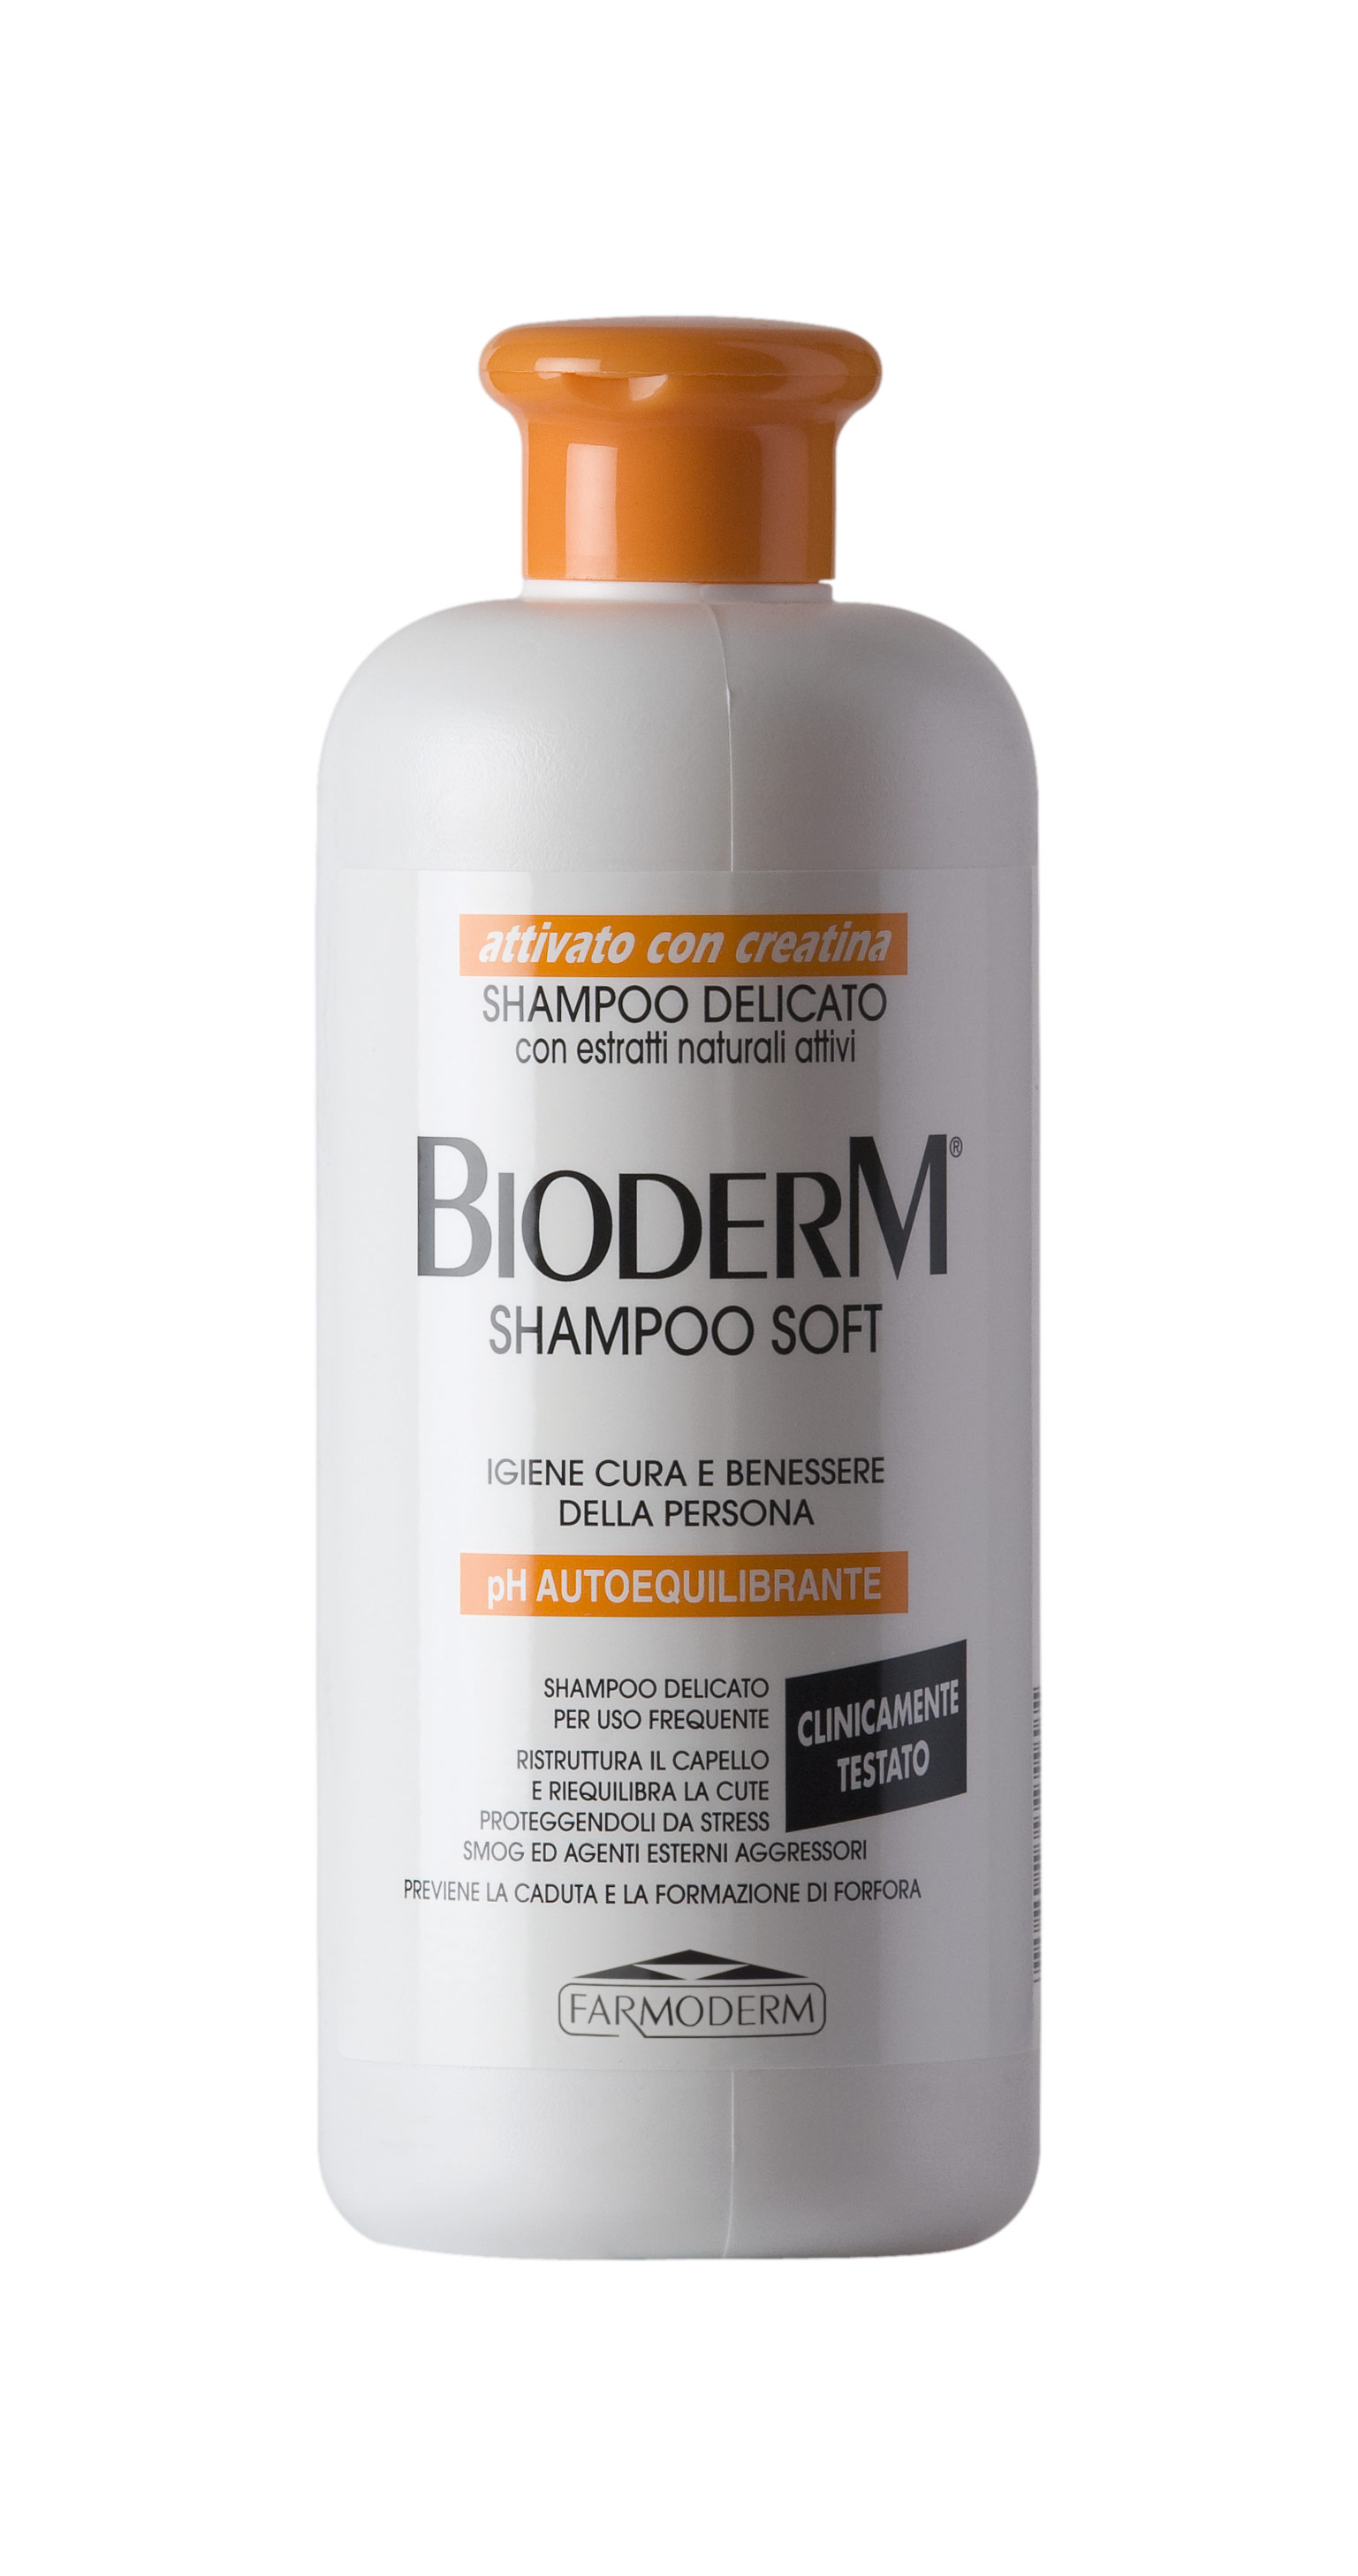 Image of Bioderm Shampoo Soft 500ml 902408463